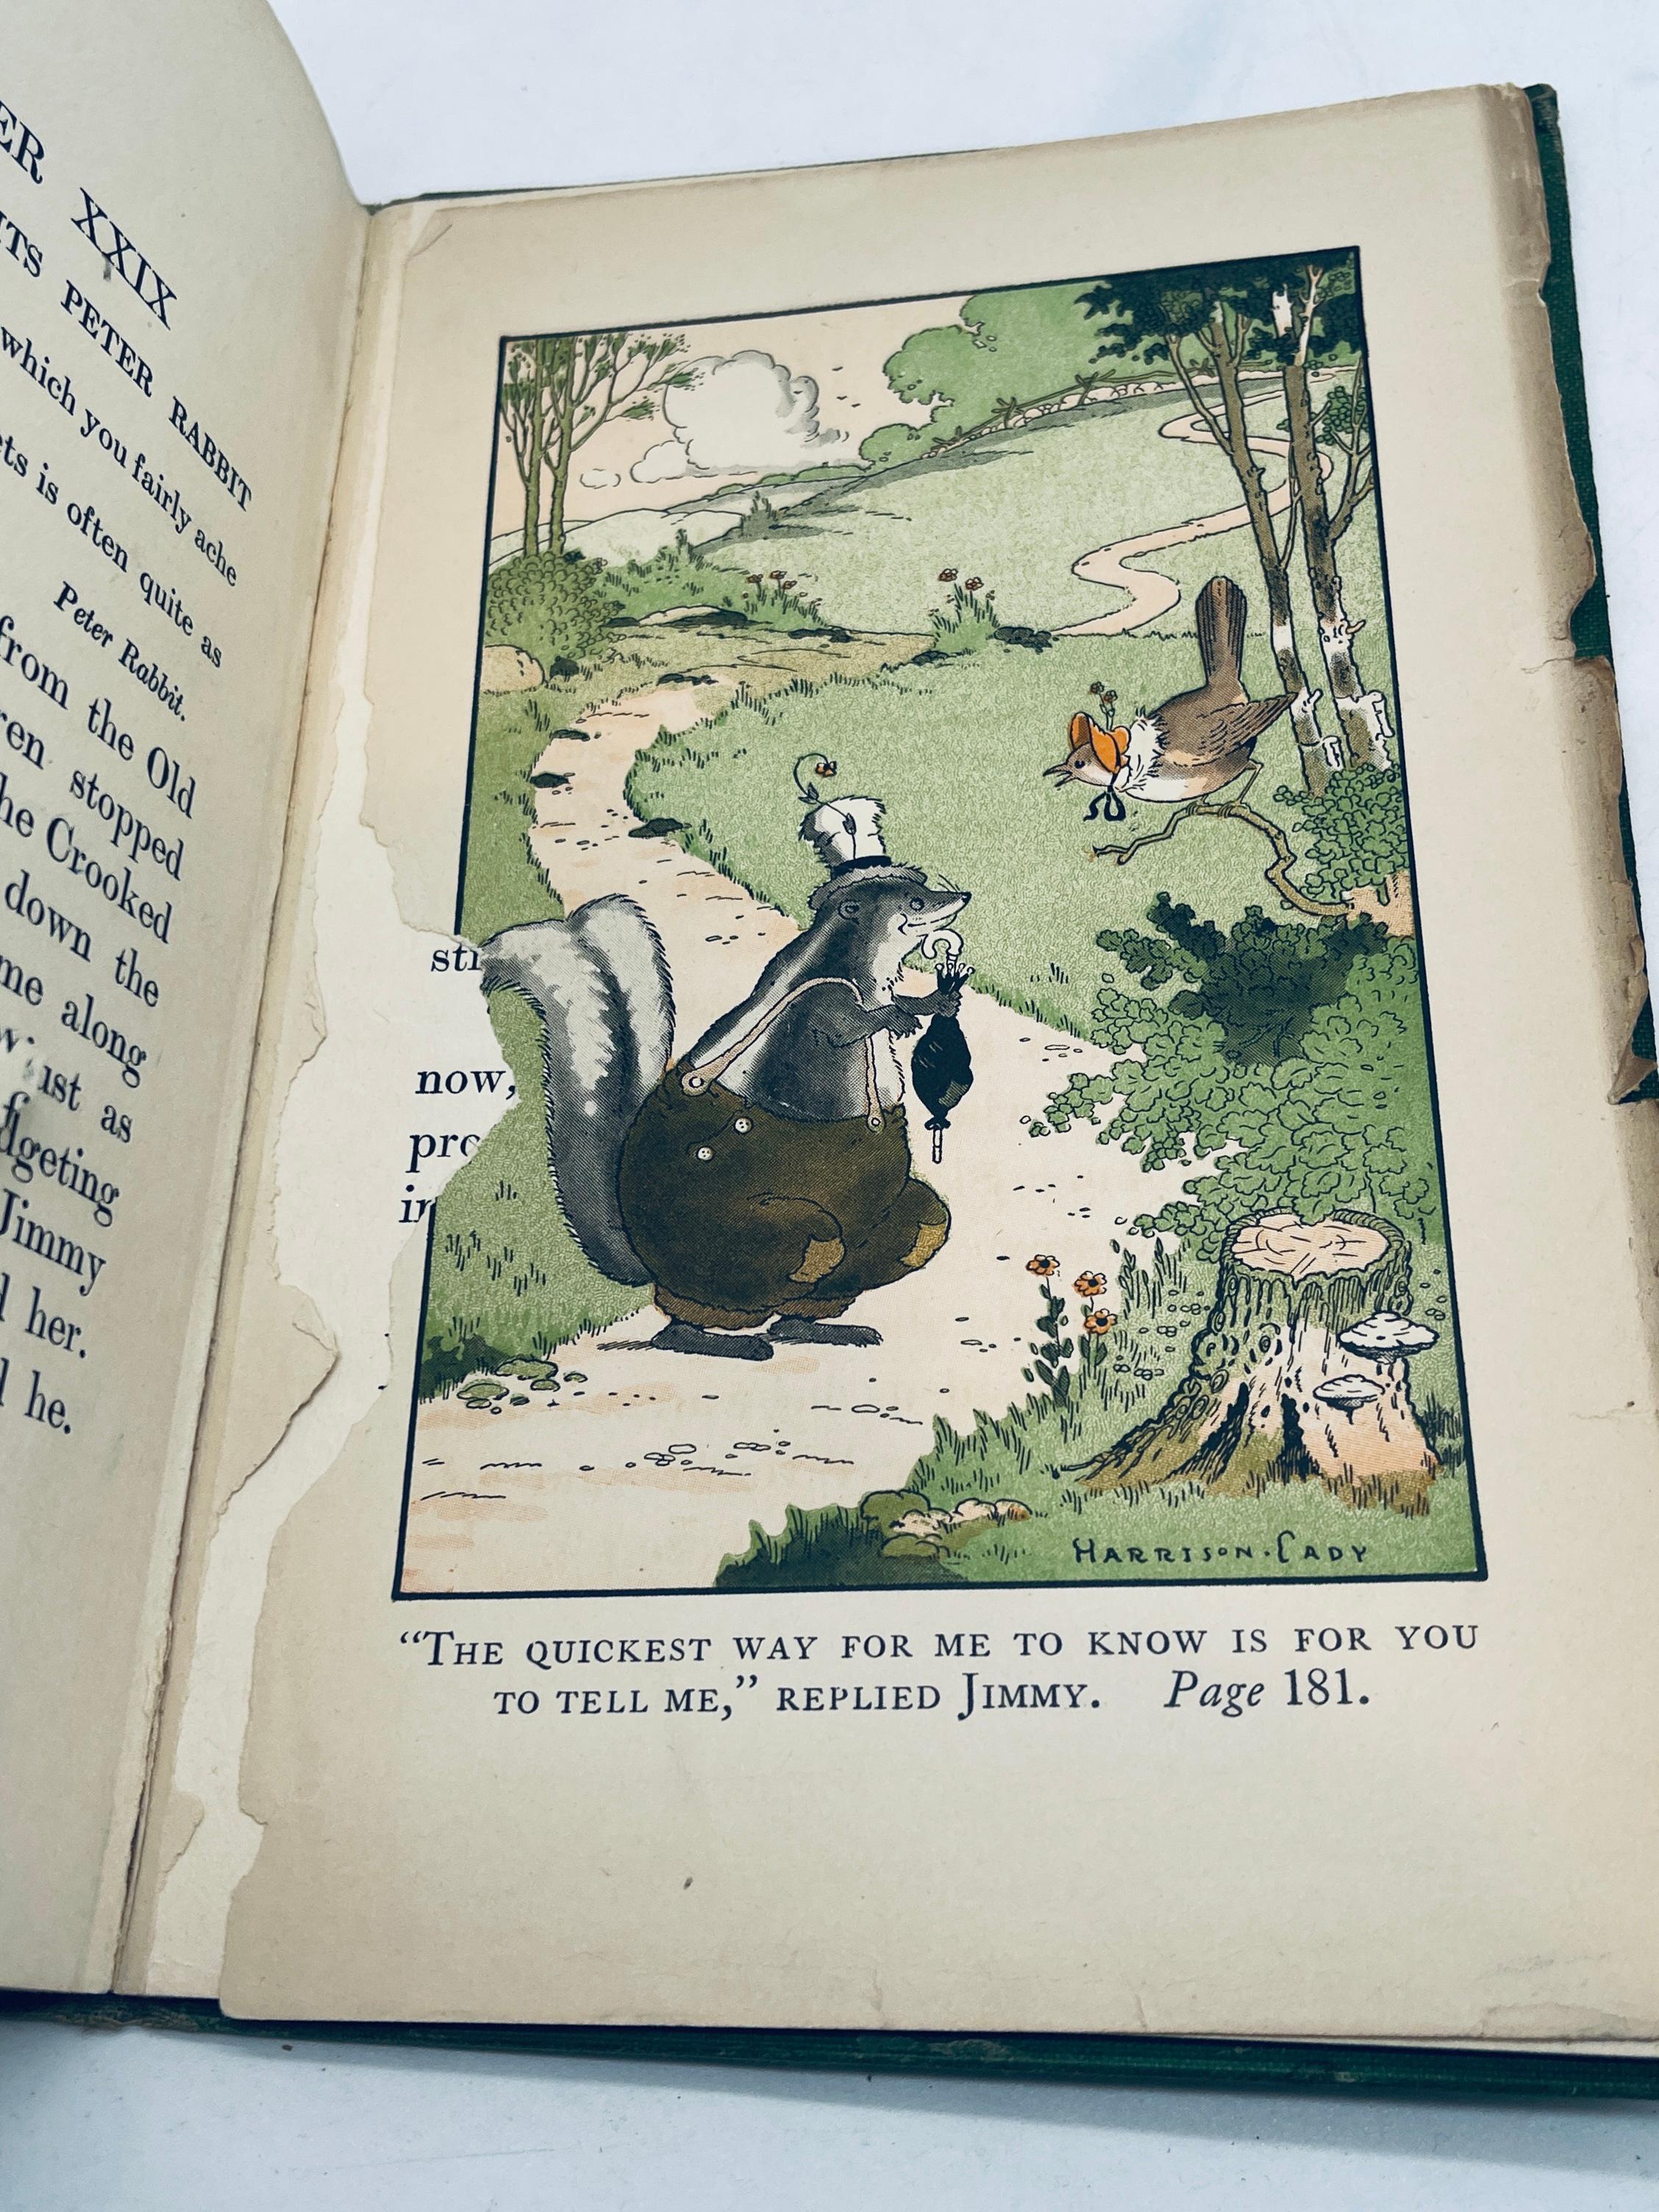 RARE MRS. PETER RABBIT by Thornton W. Burgess (1919) Illustrated